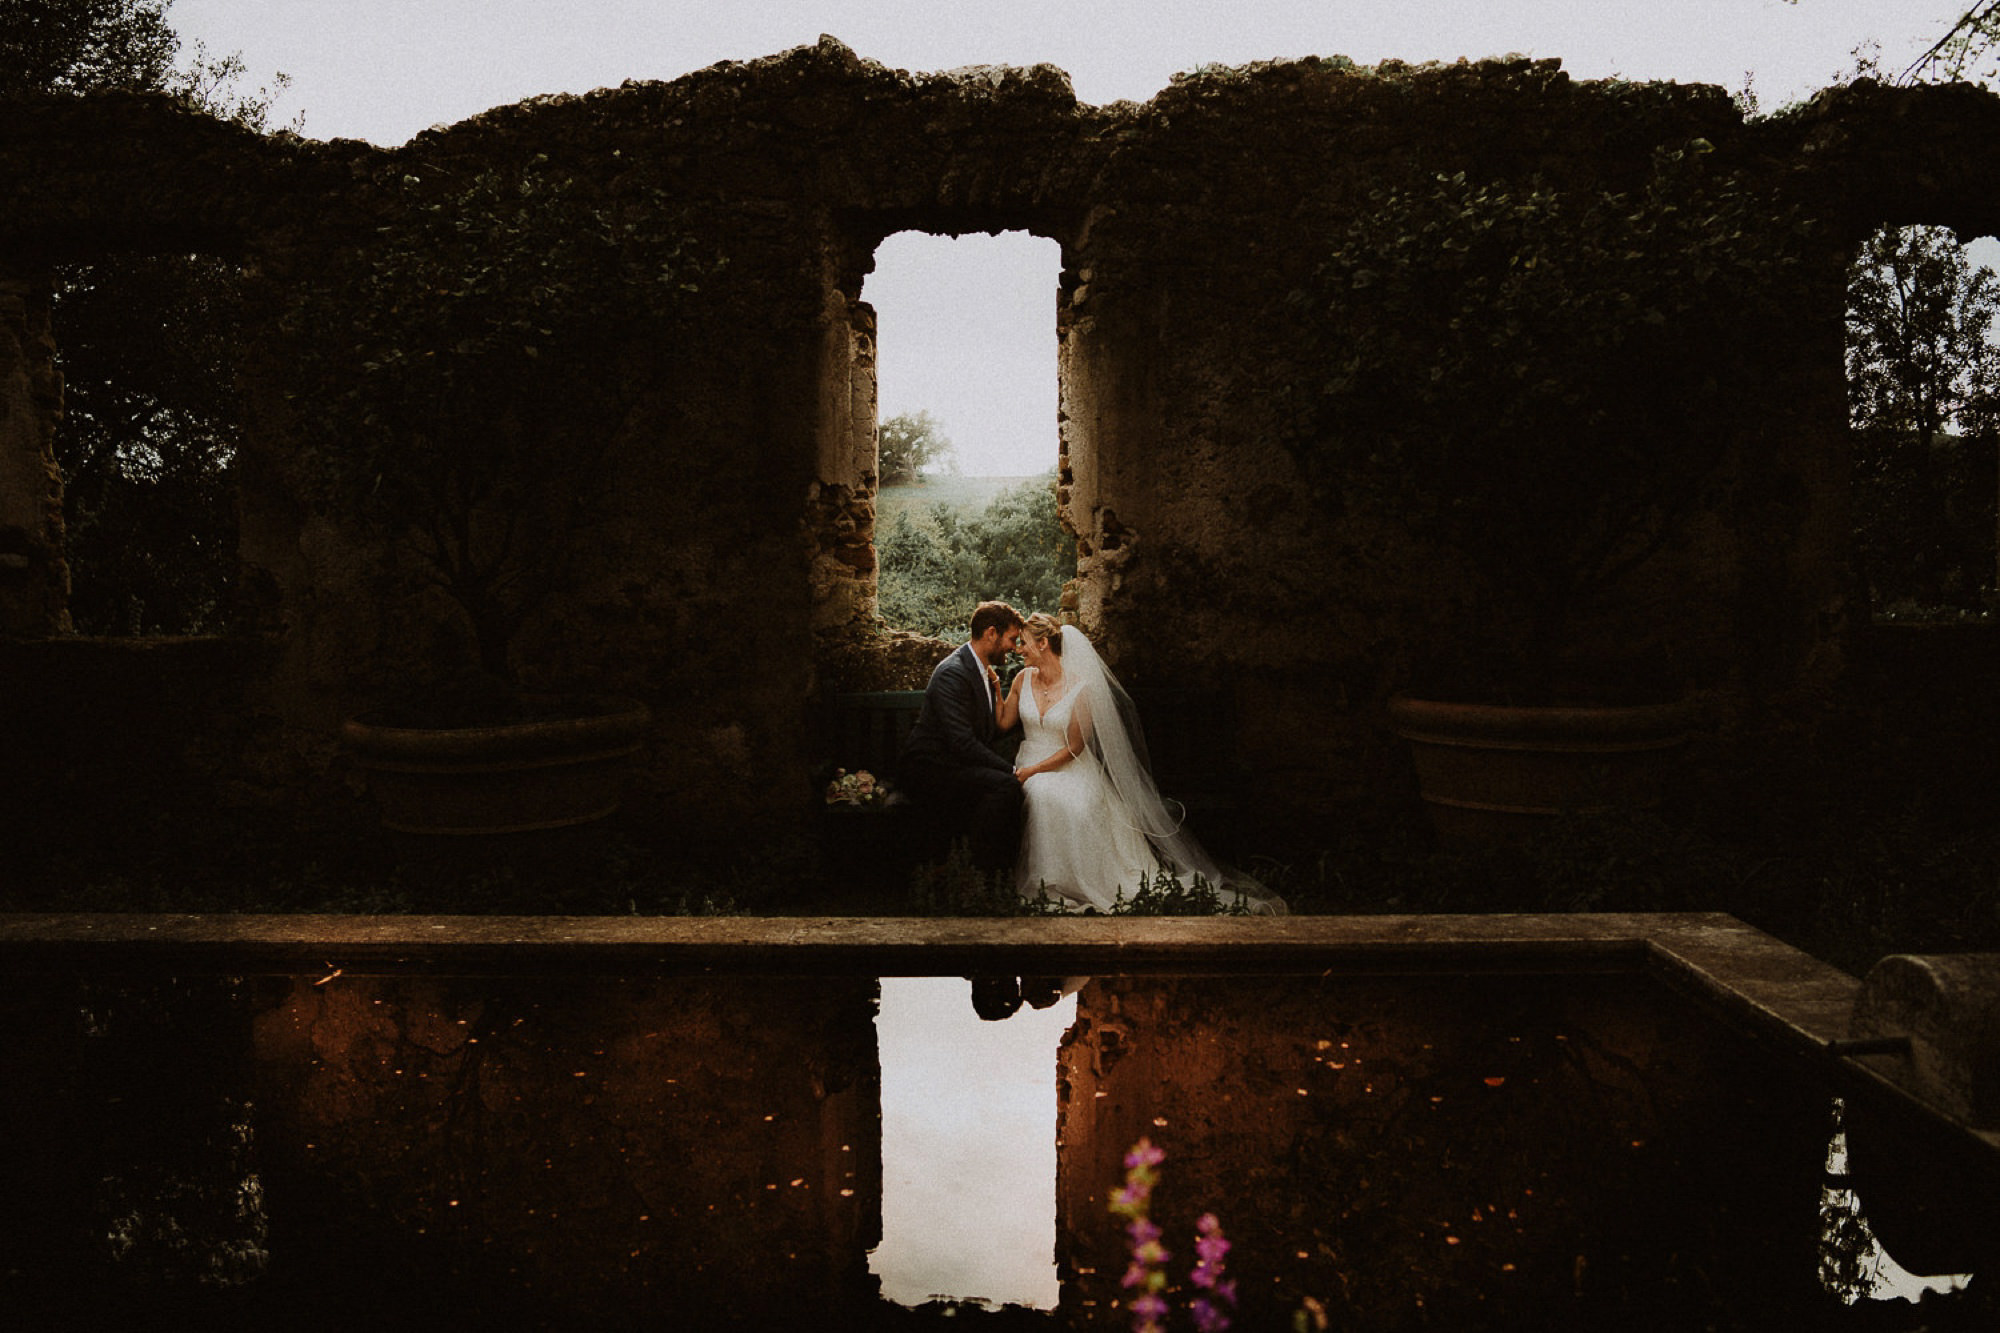 matrimonio intimo roma villa giardino botanico migliore fotografo massaro